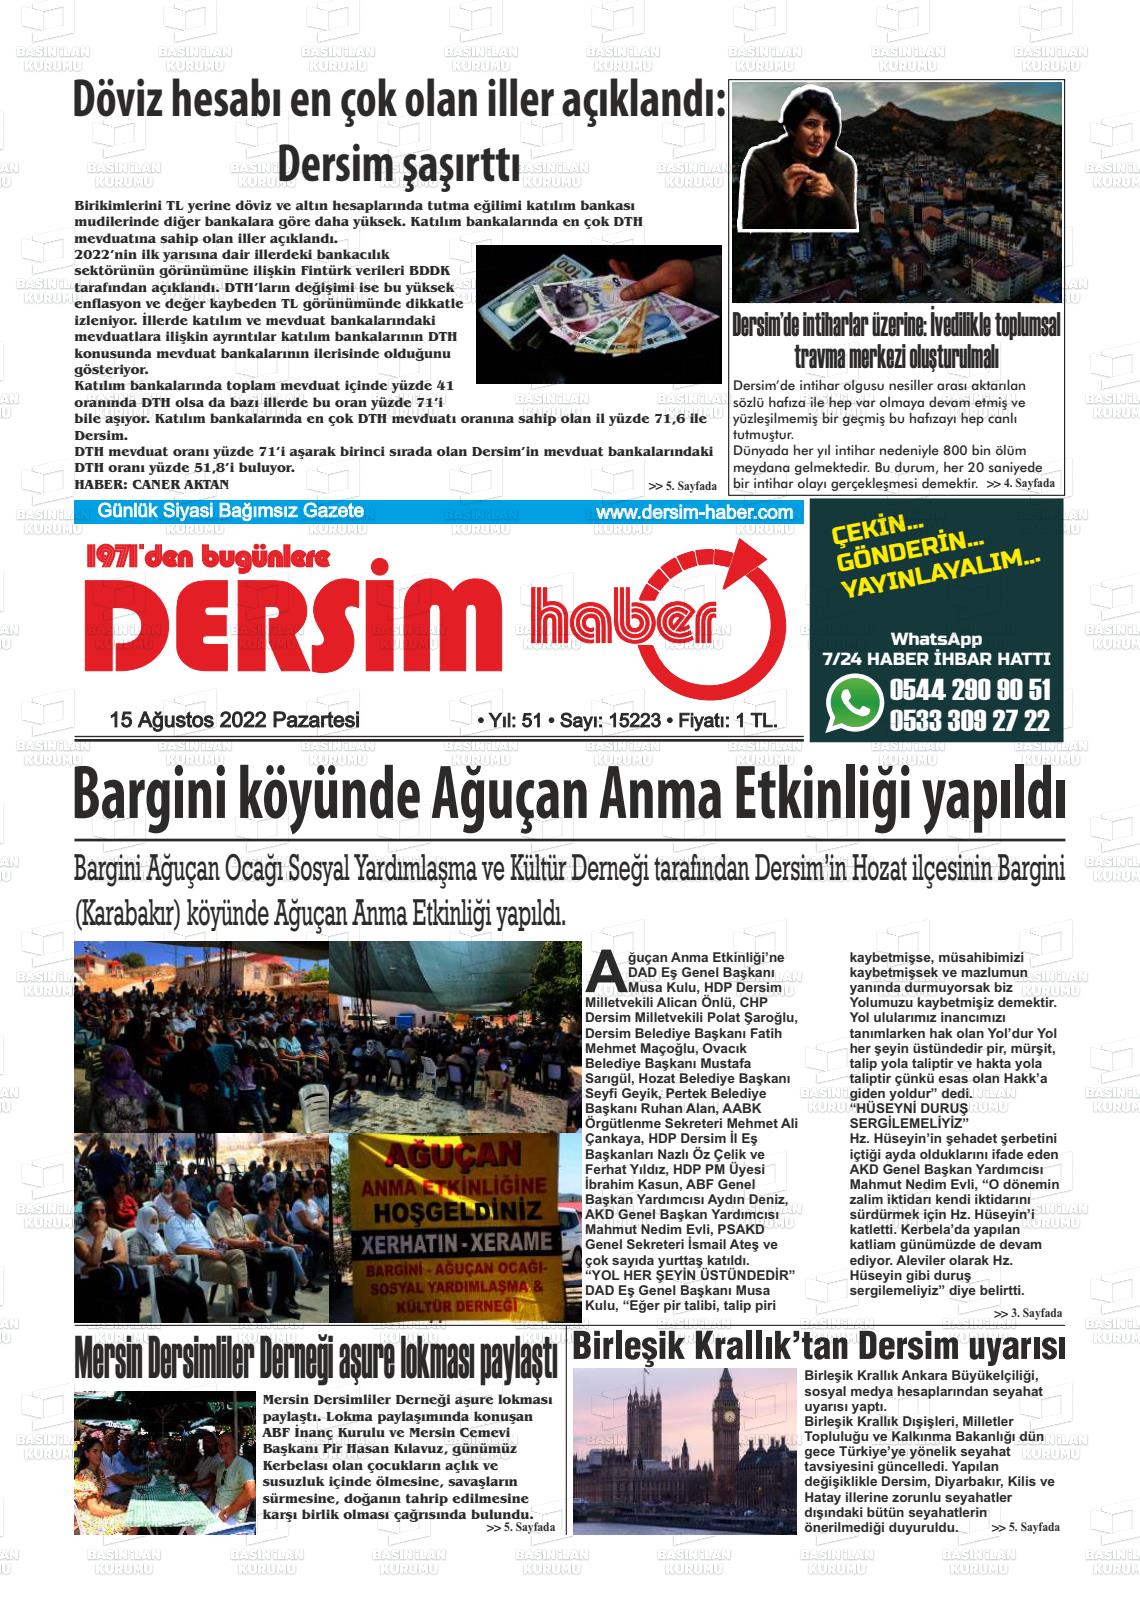 15 Ağustos 2022 DERSİM HABER Gazete Manşeti